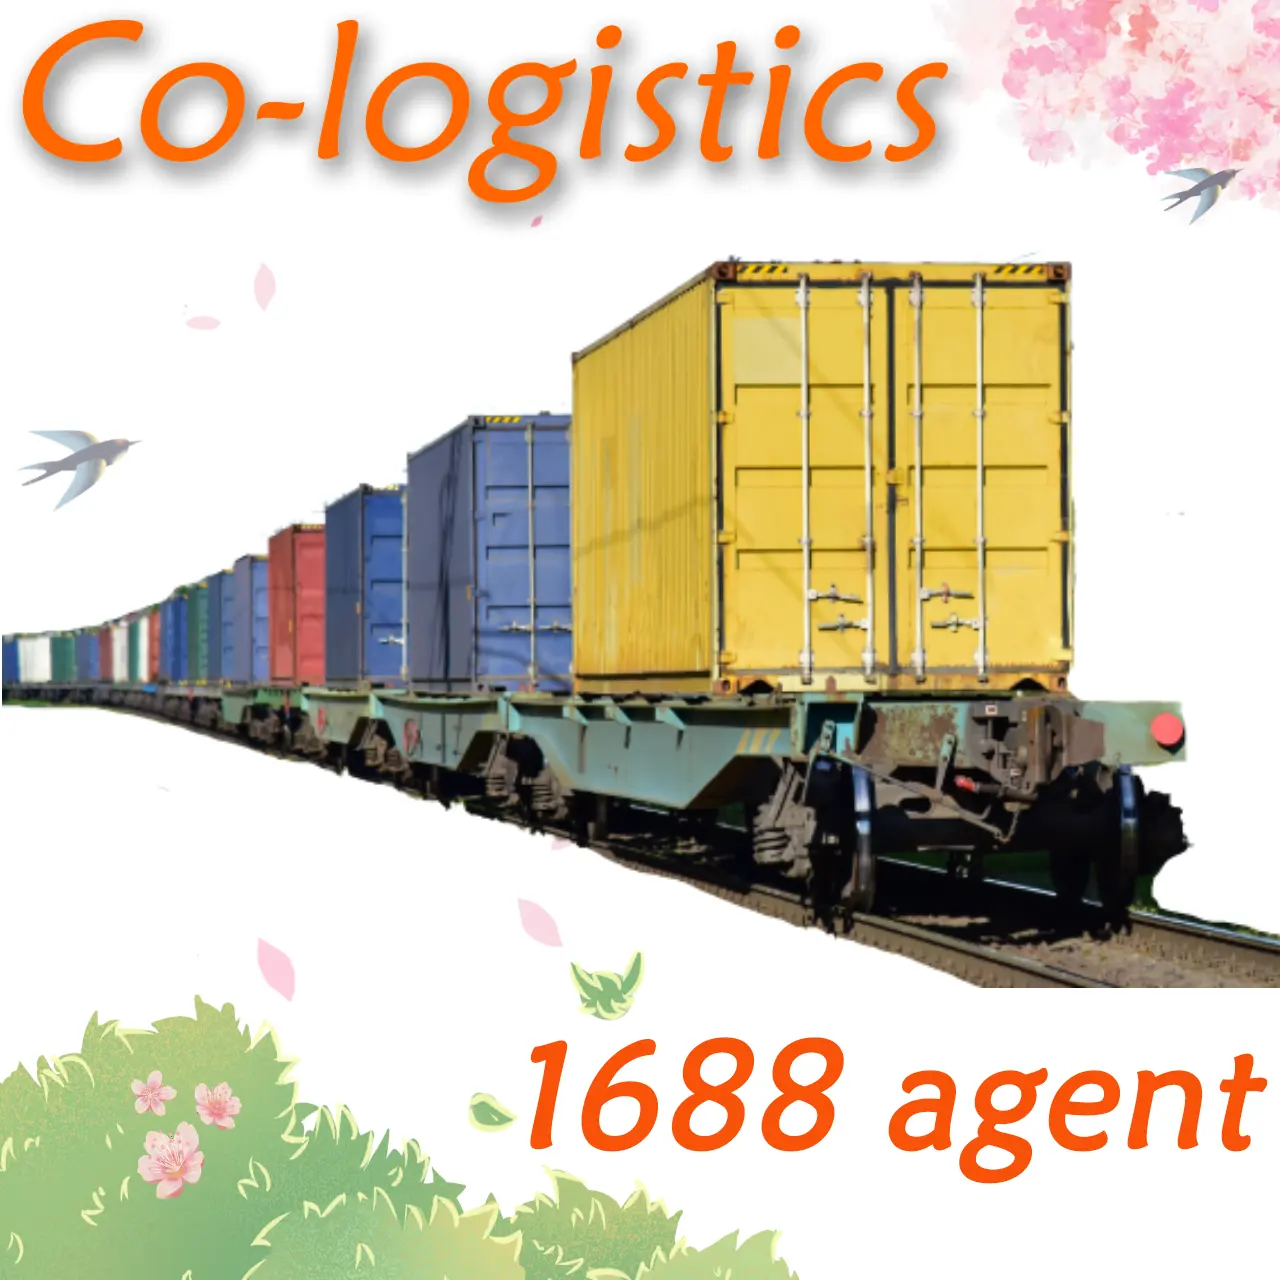 Railway cargo shipping cost bulk freight forwarder door to door service from Shenzhen China to UK Europe